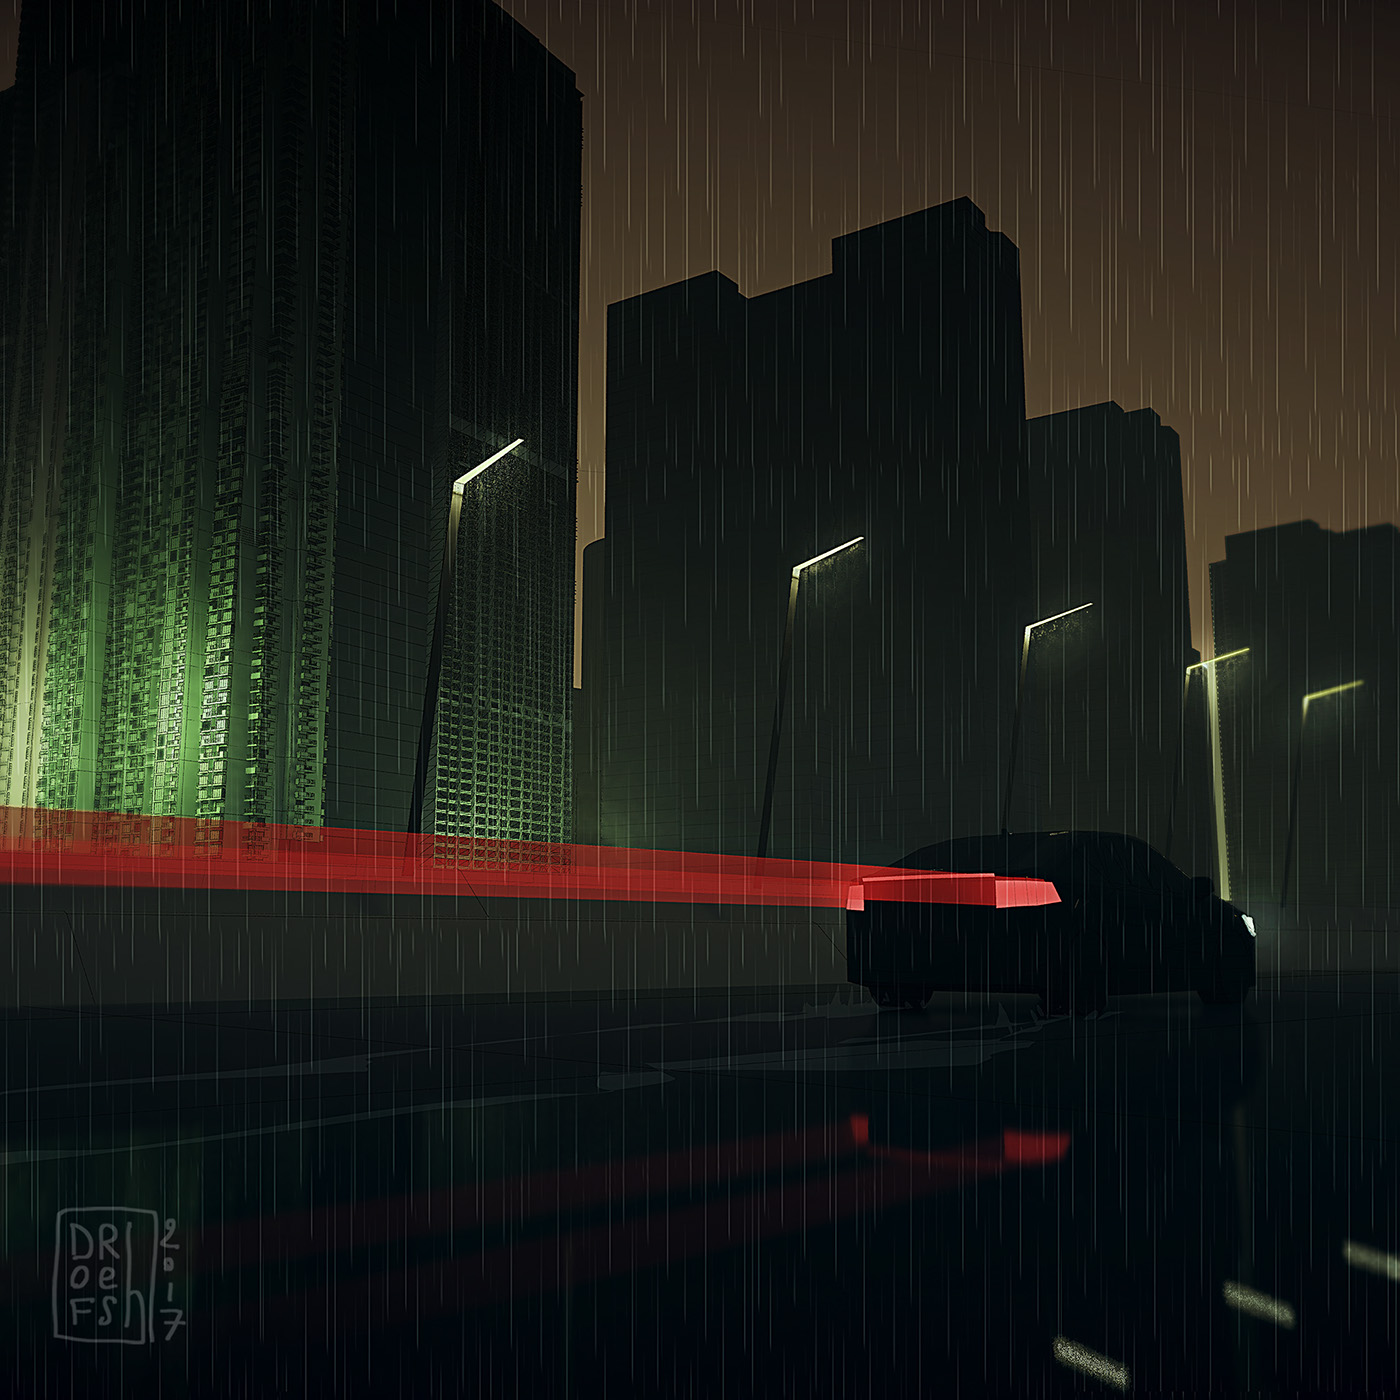 city town building suburb projects rain night gloomy Cyberpunk depressing